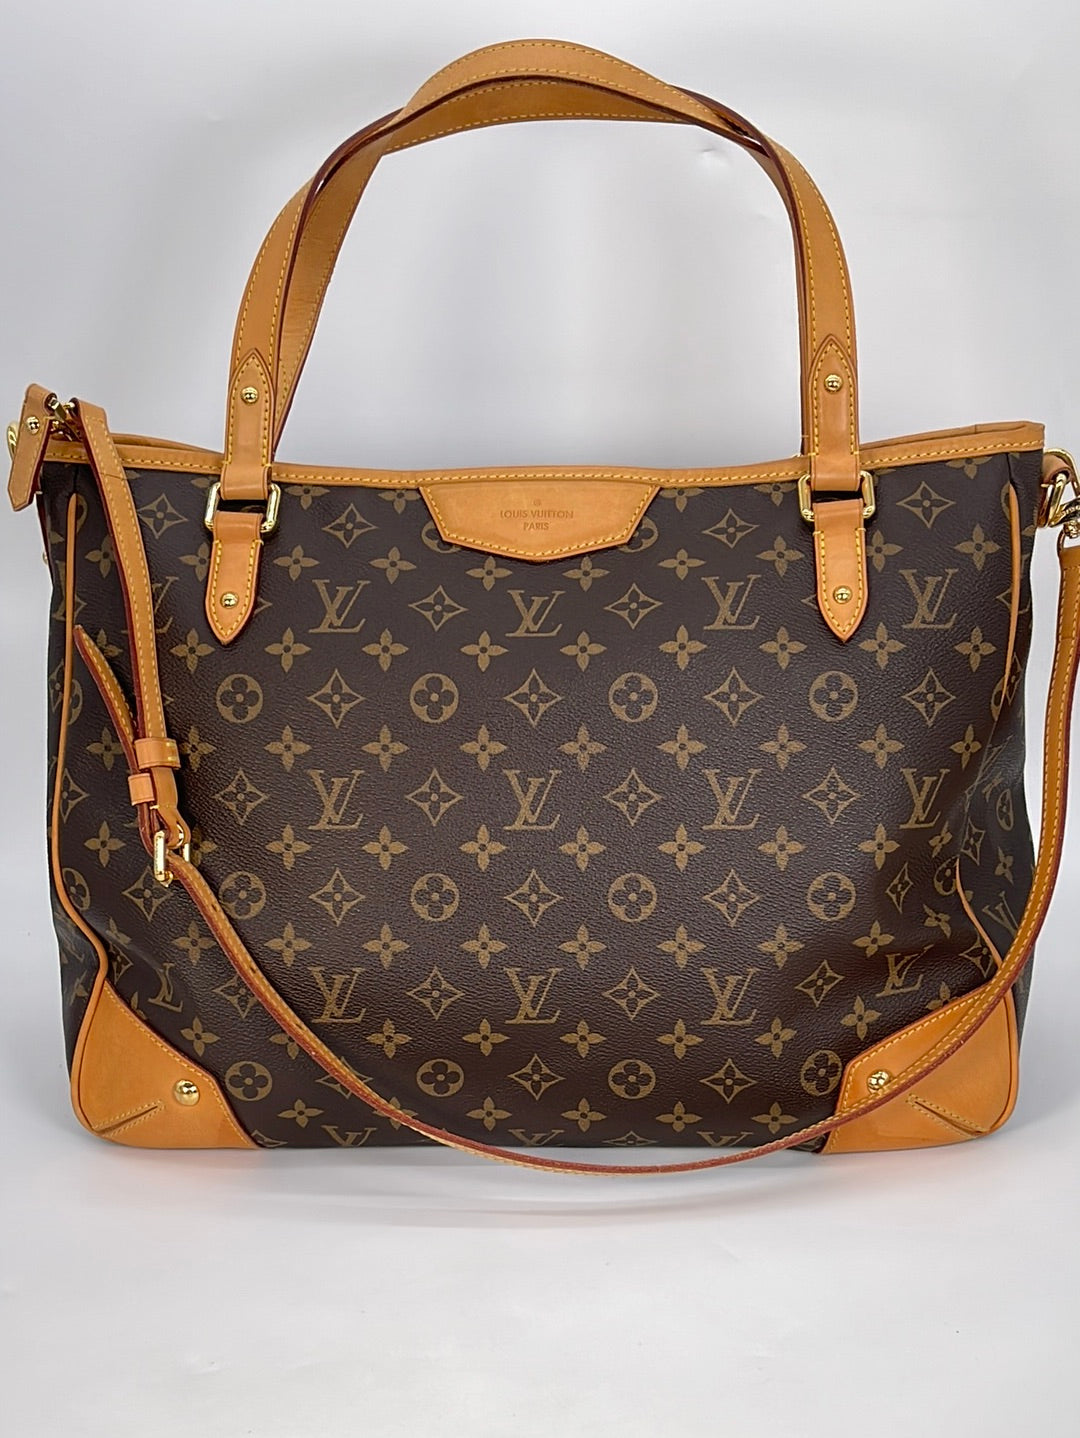 Preloved Authentic Louis Vuitton Estrela Monogram Shoulder Bag